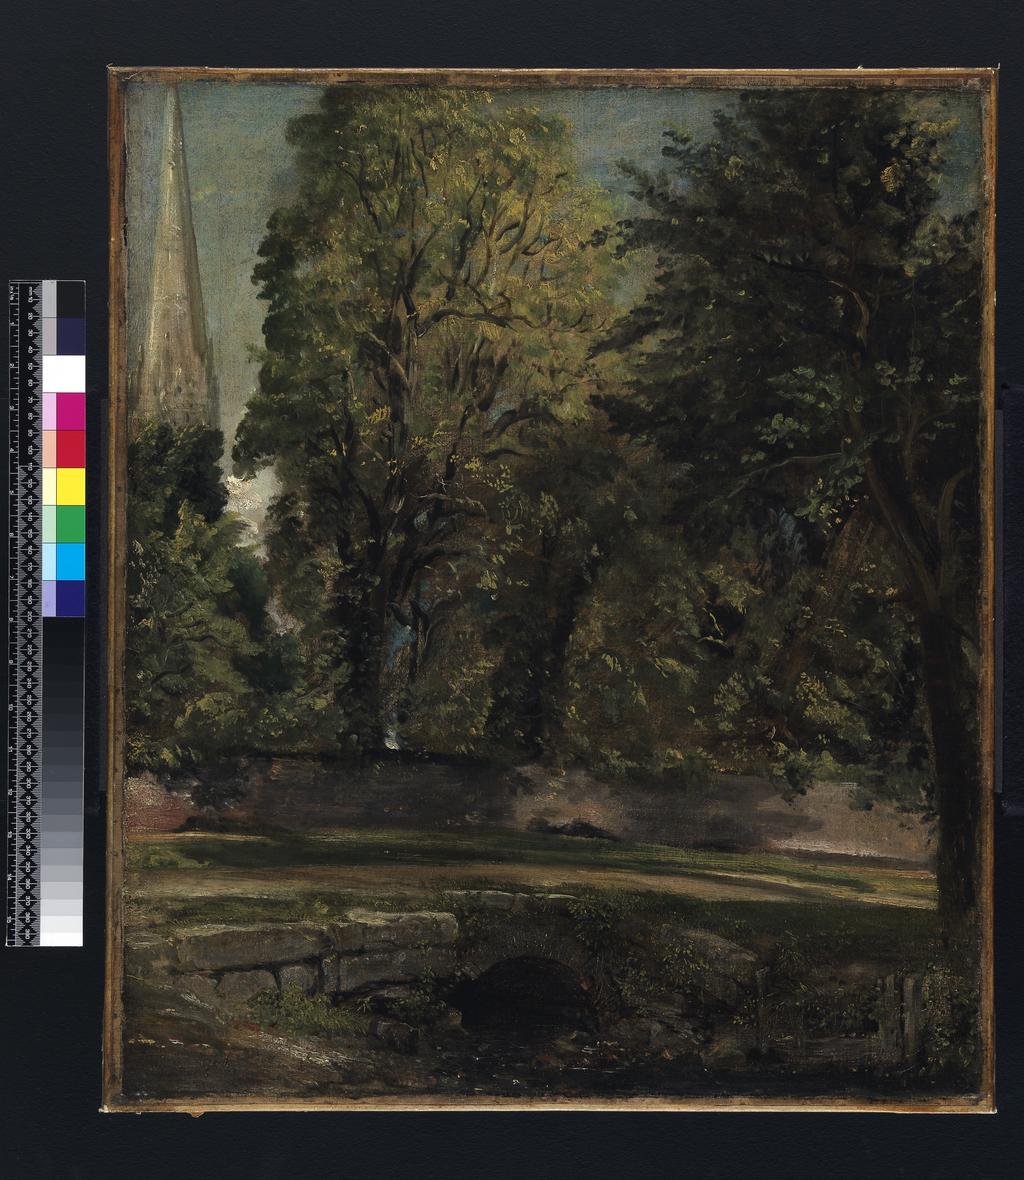 An image of Salisbury. Constable, John (British, 1776-1837). Oil on canvas, height 61.0 cm, width 51.8 cm, circa 1829.